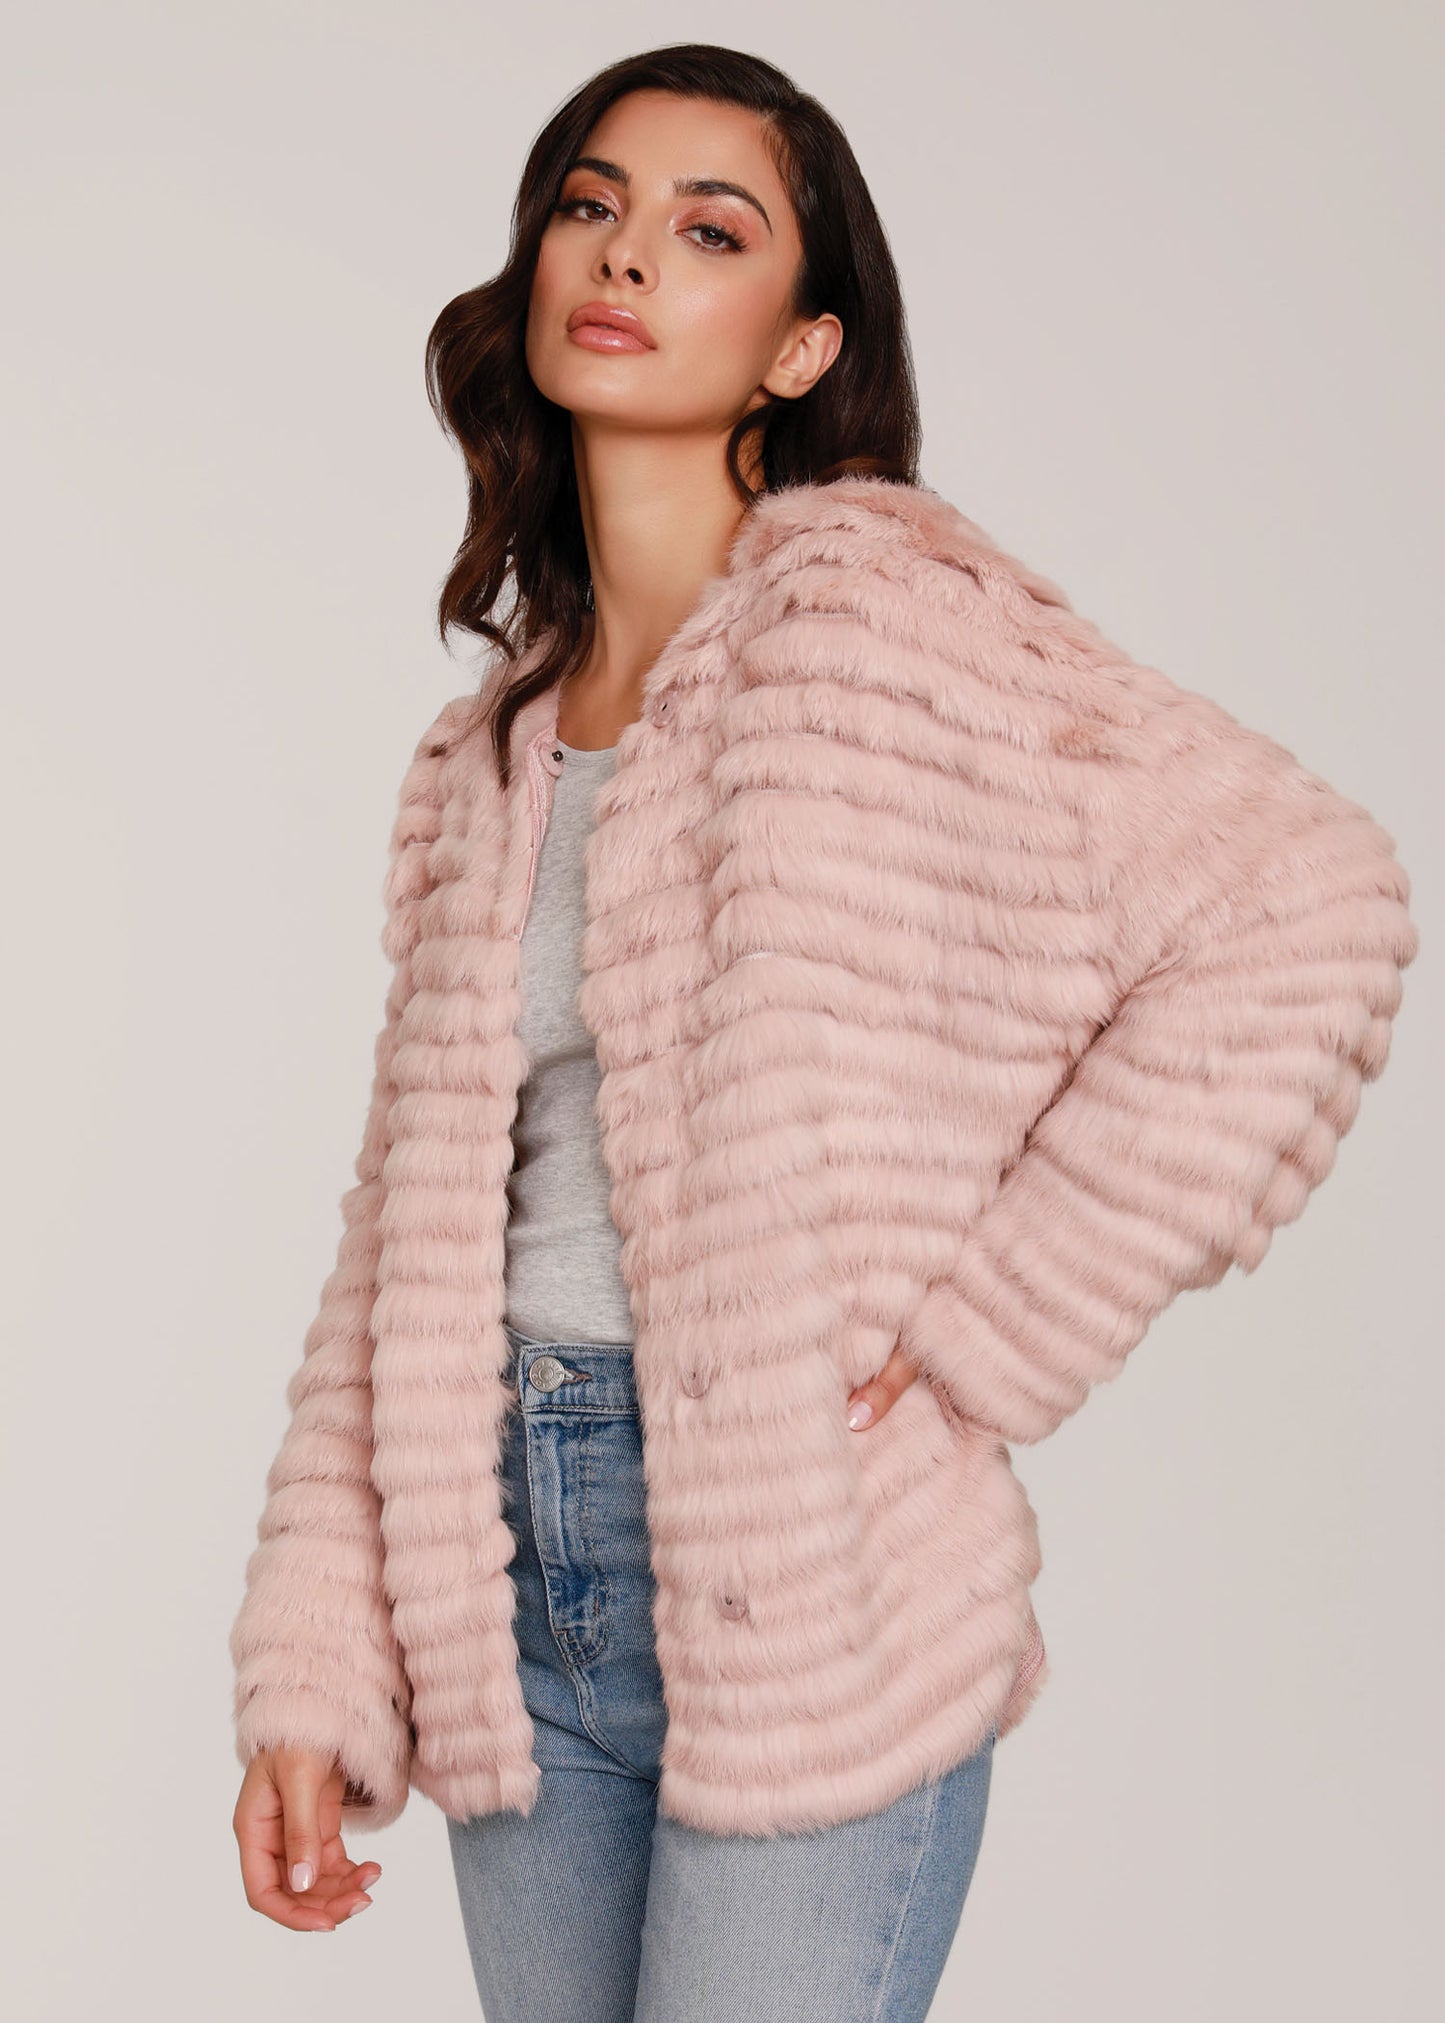 Oversized Blush Pink Fur Jacket